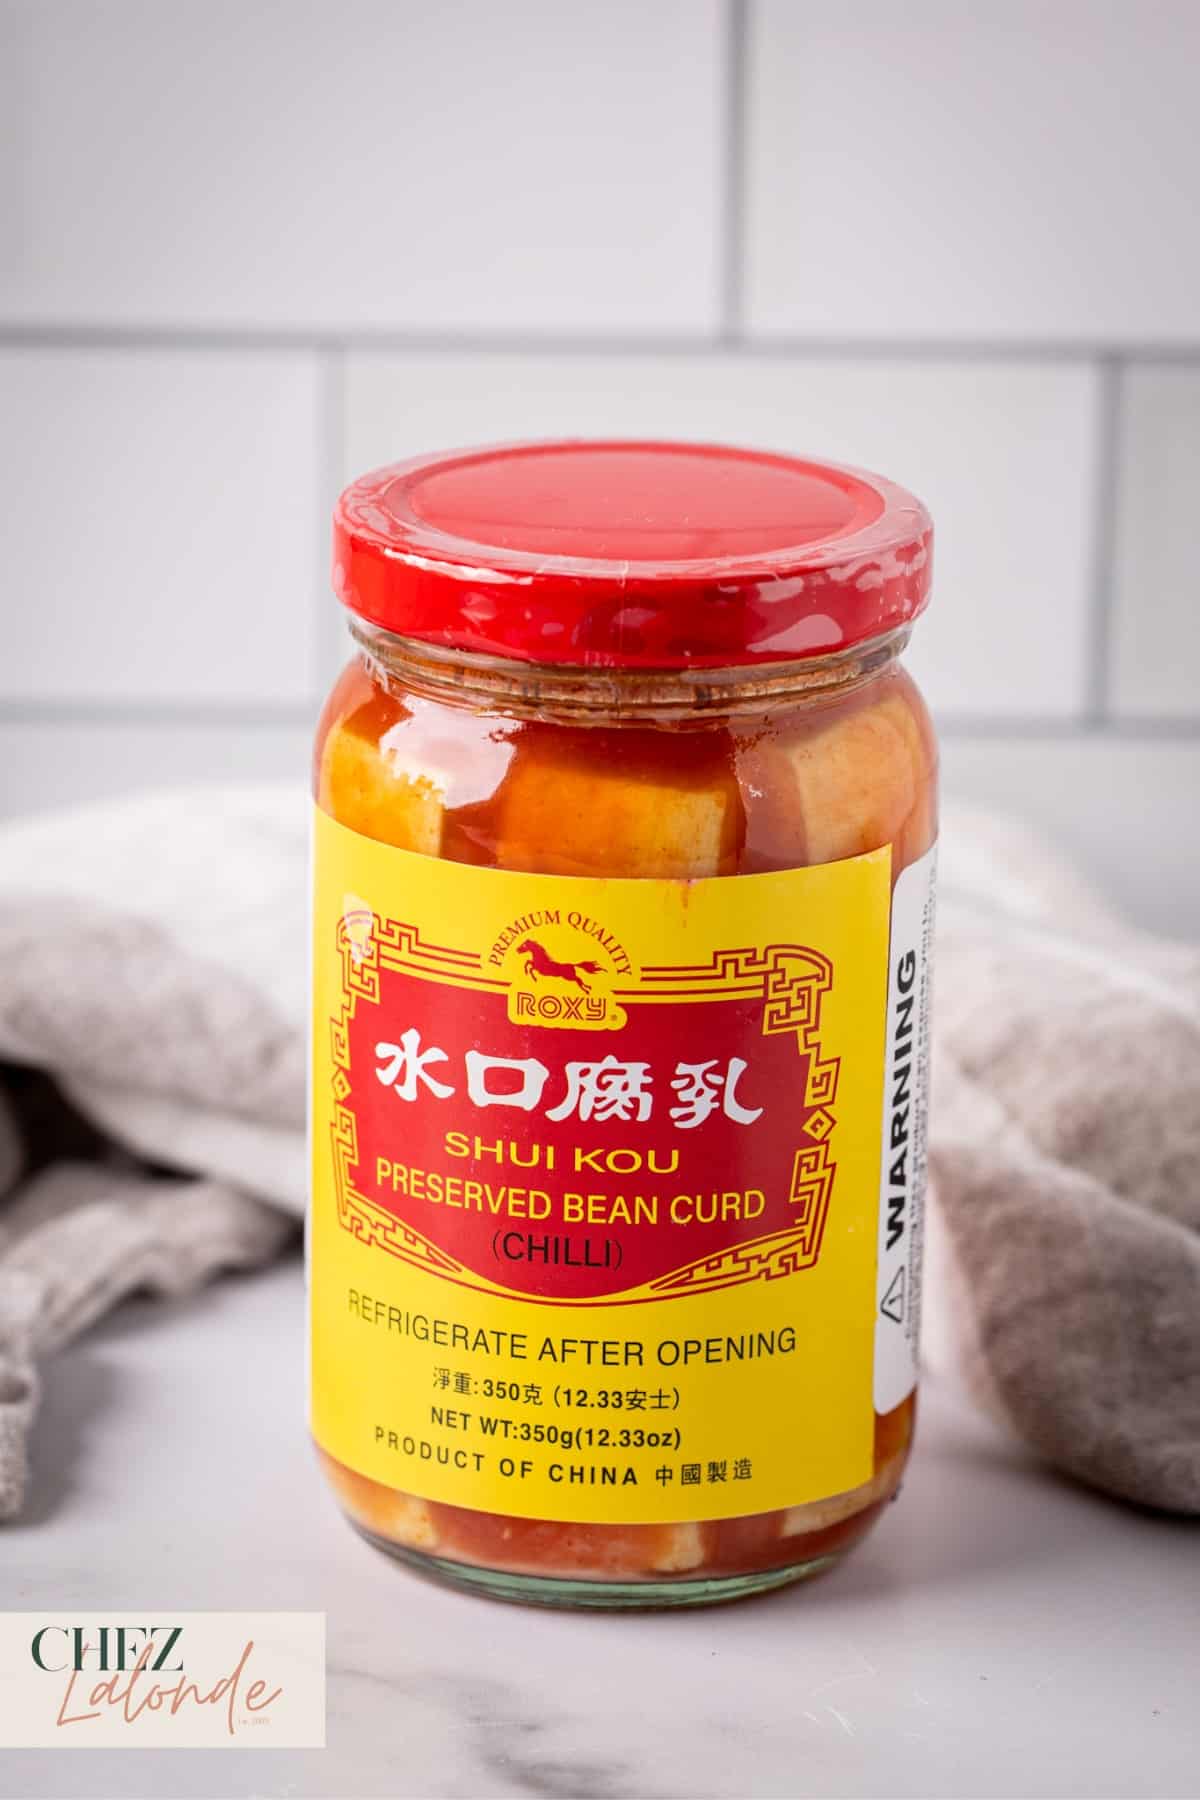 A jar of Preserved Chili bean Curd.